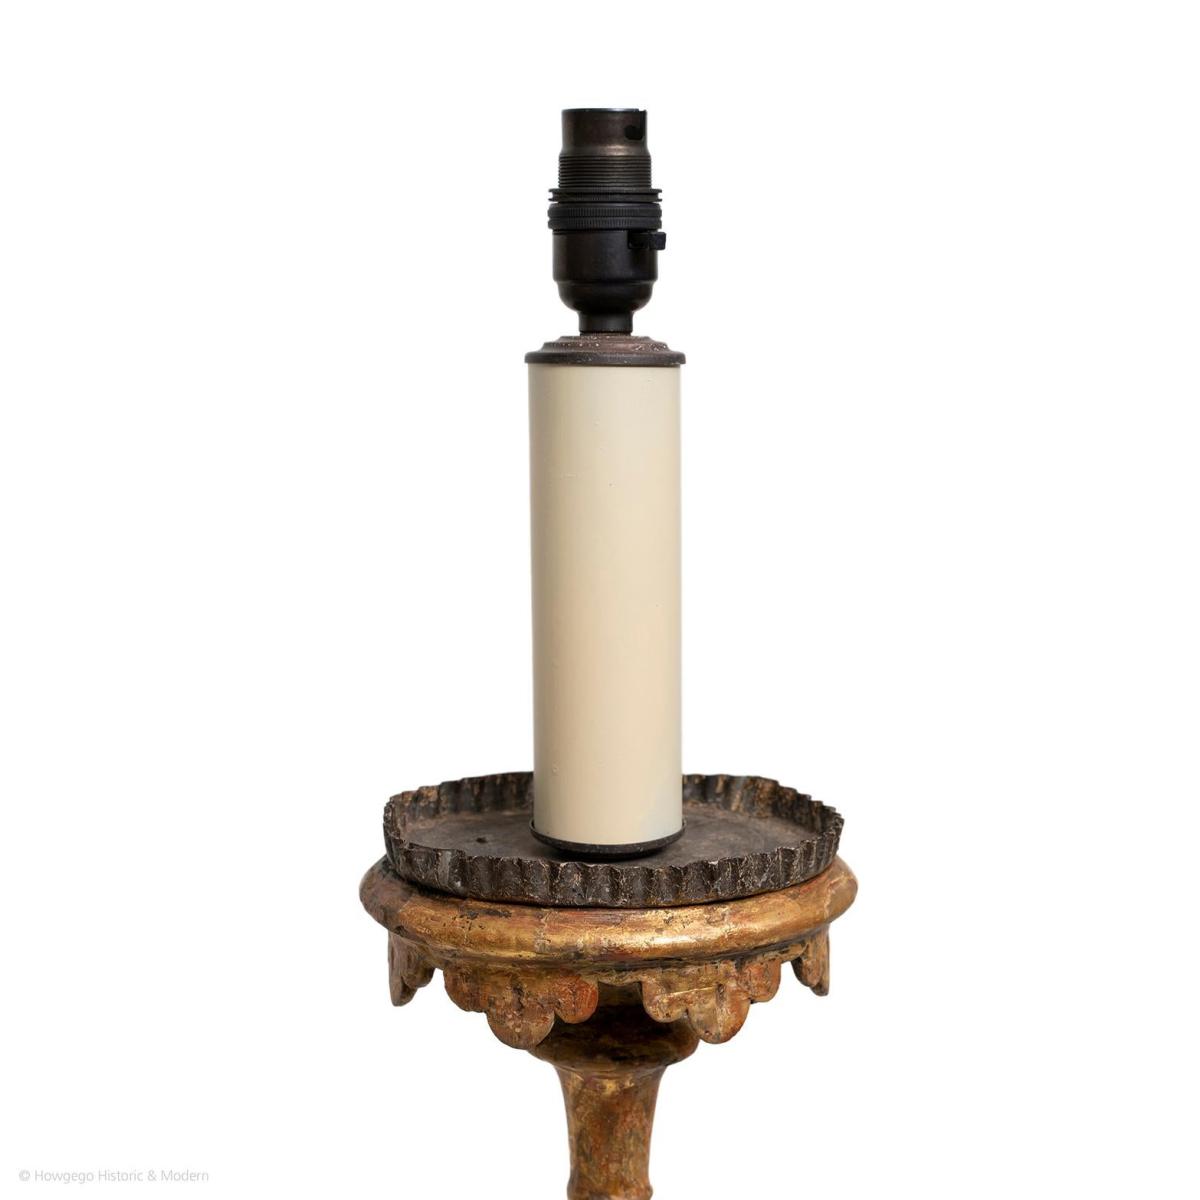 Gilded Italian Triform Candlestick Lamp